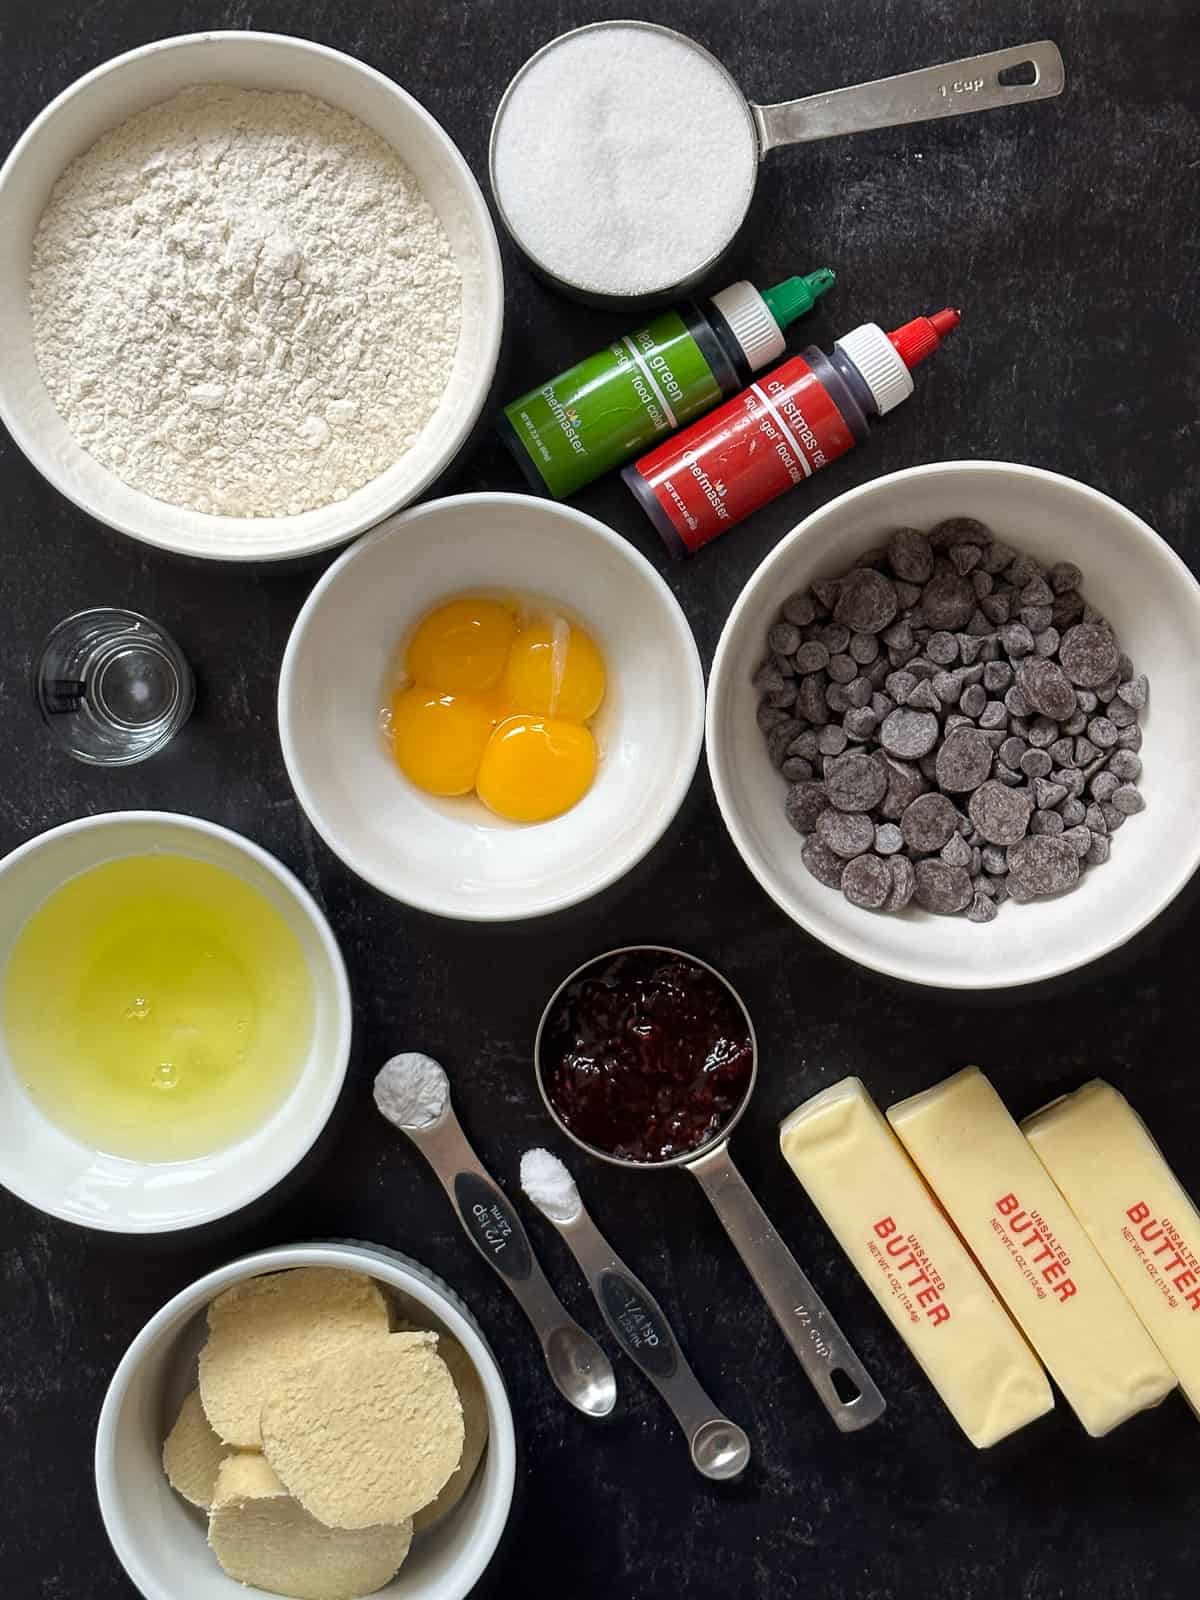 Ingredients for Italian rainbow cookies on black background.